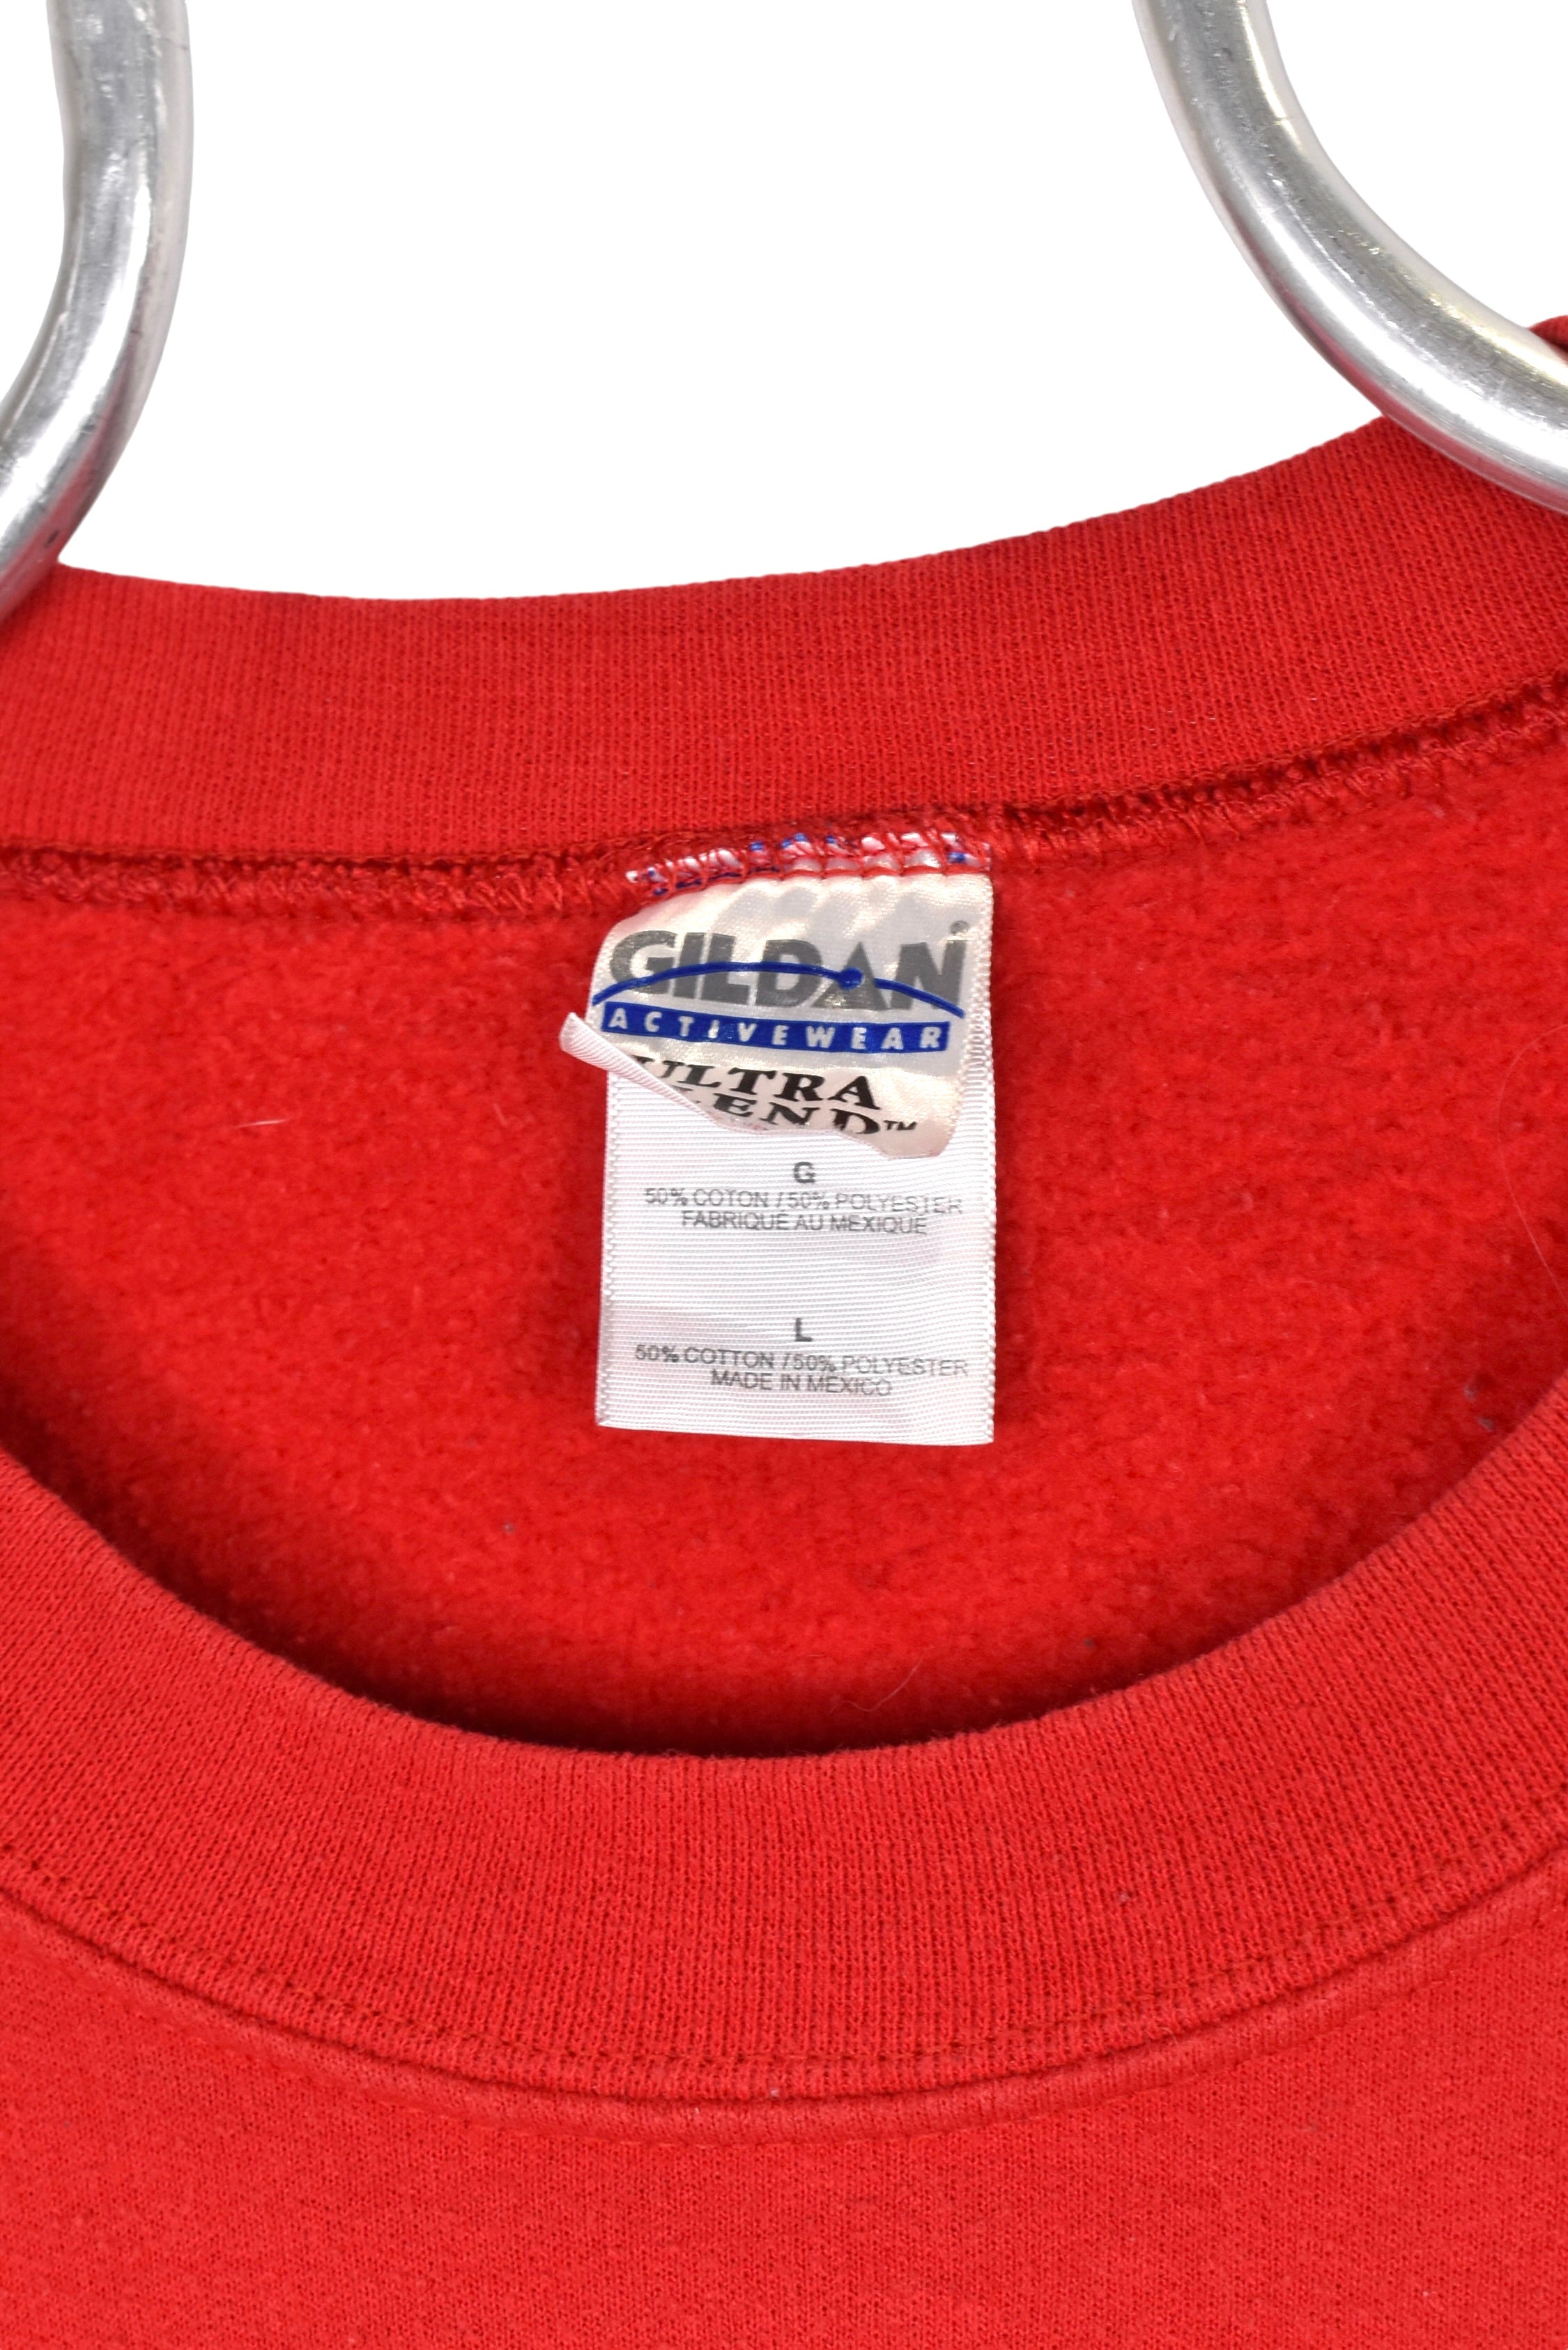 Vintage University of Wisconsin sweatshirt, red graphic crewneck - Large